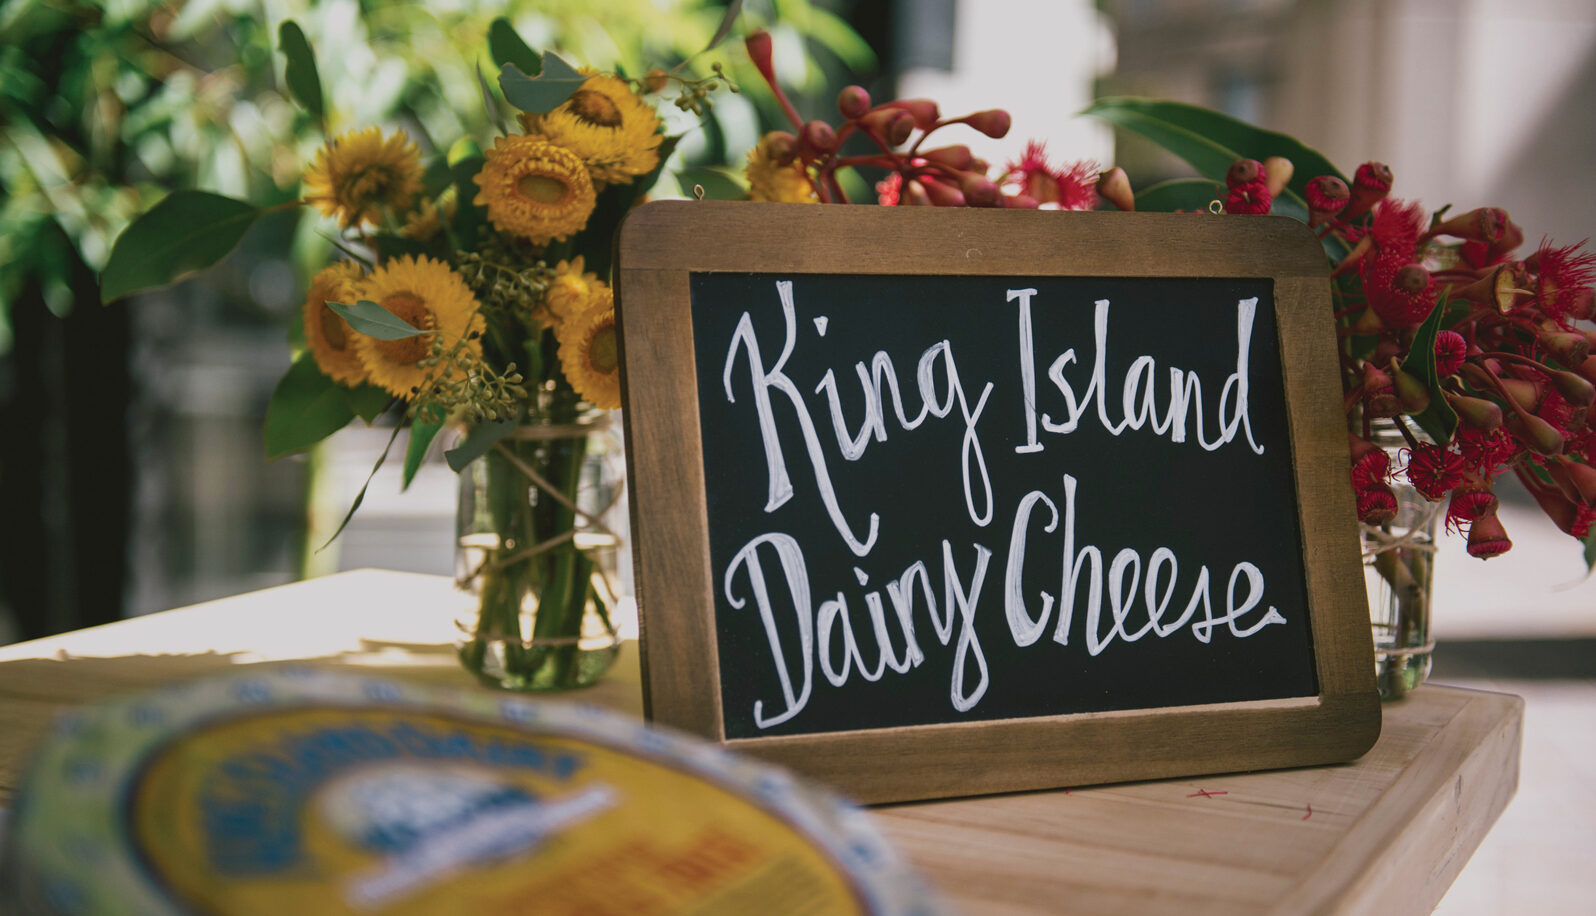 King Island Dairy Cheese, Tasmania